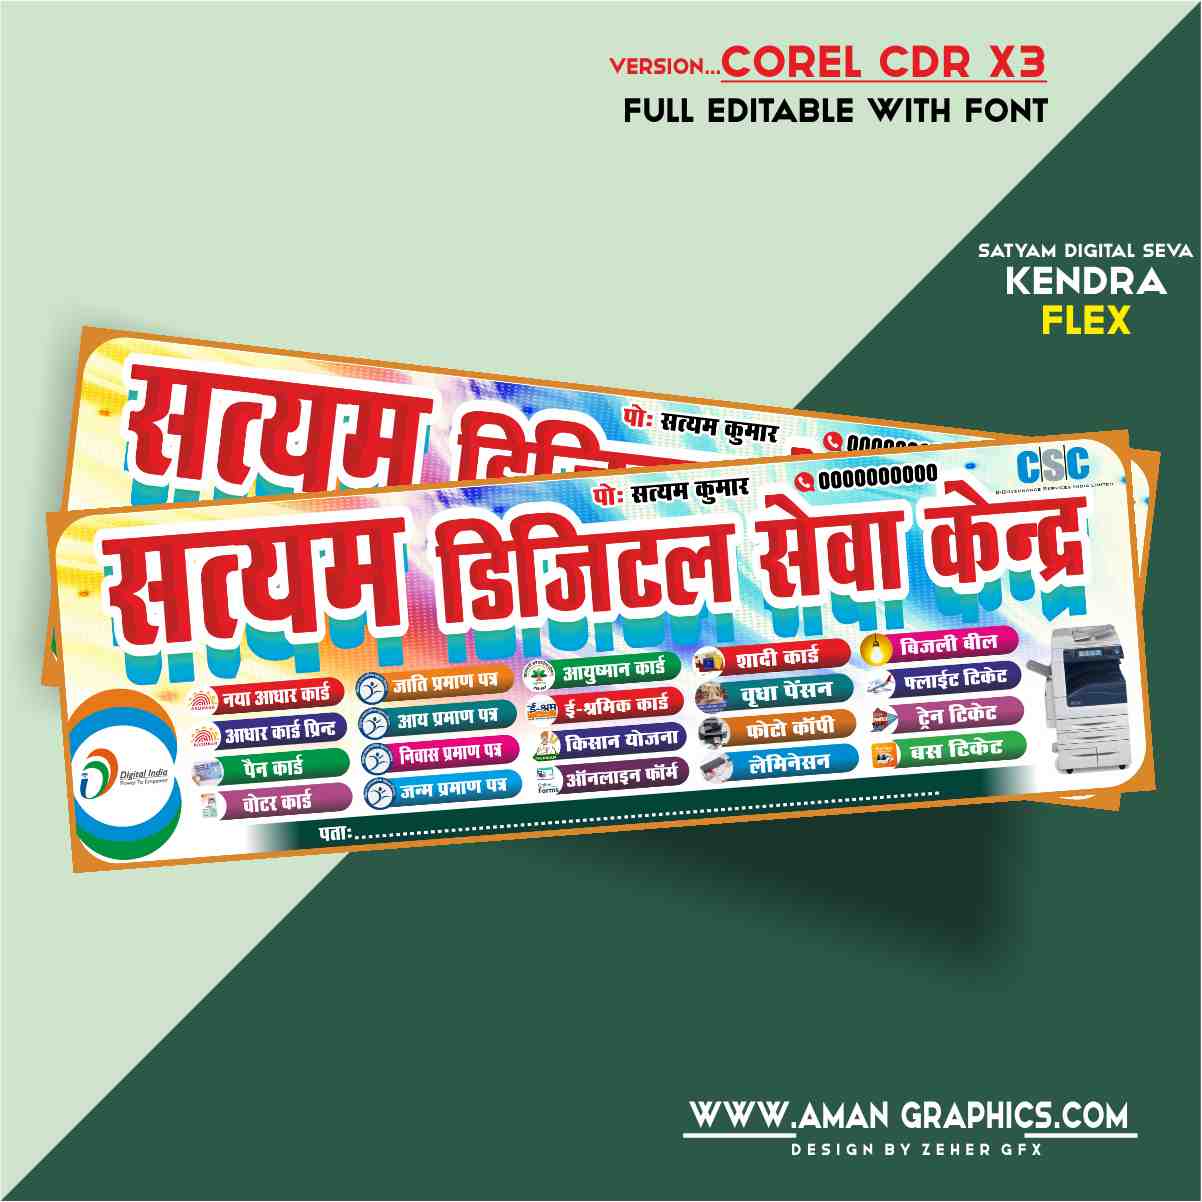 Satyam Digital Seva Kendra Banner Design 2024 Cdr File FLEX BANNER FLEX,EMITRA BANNER